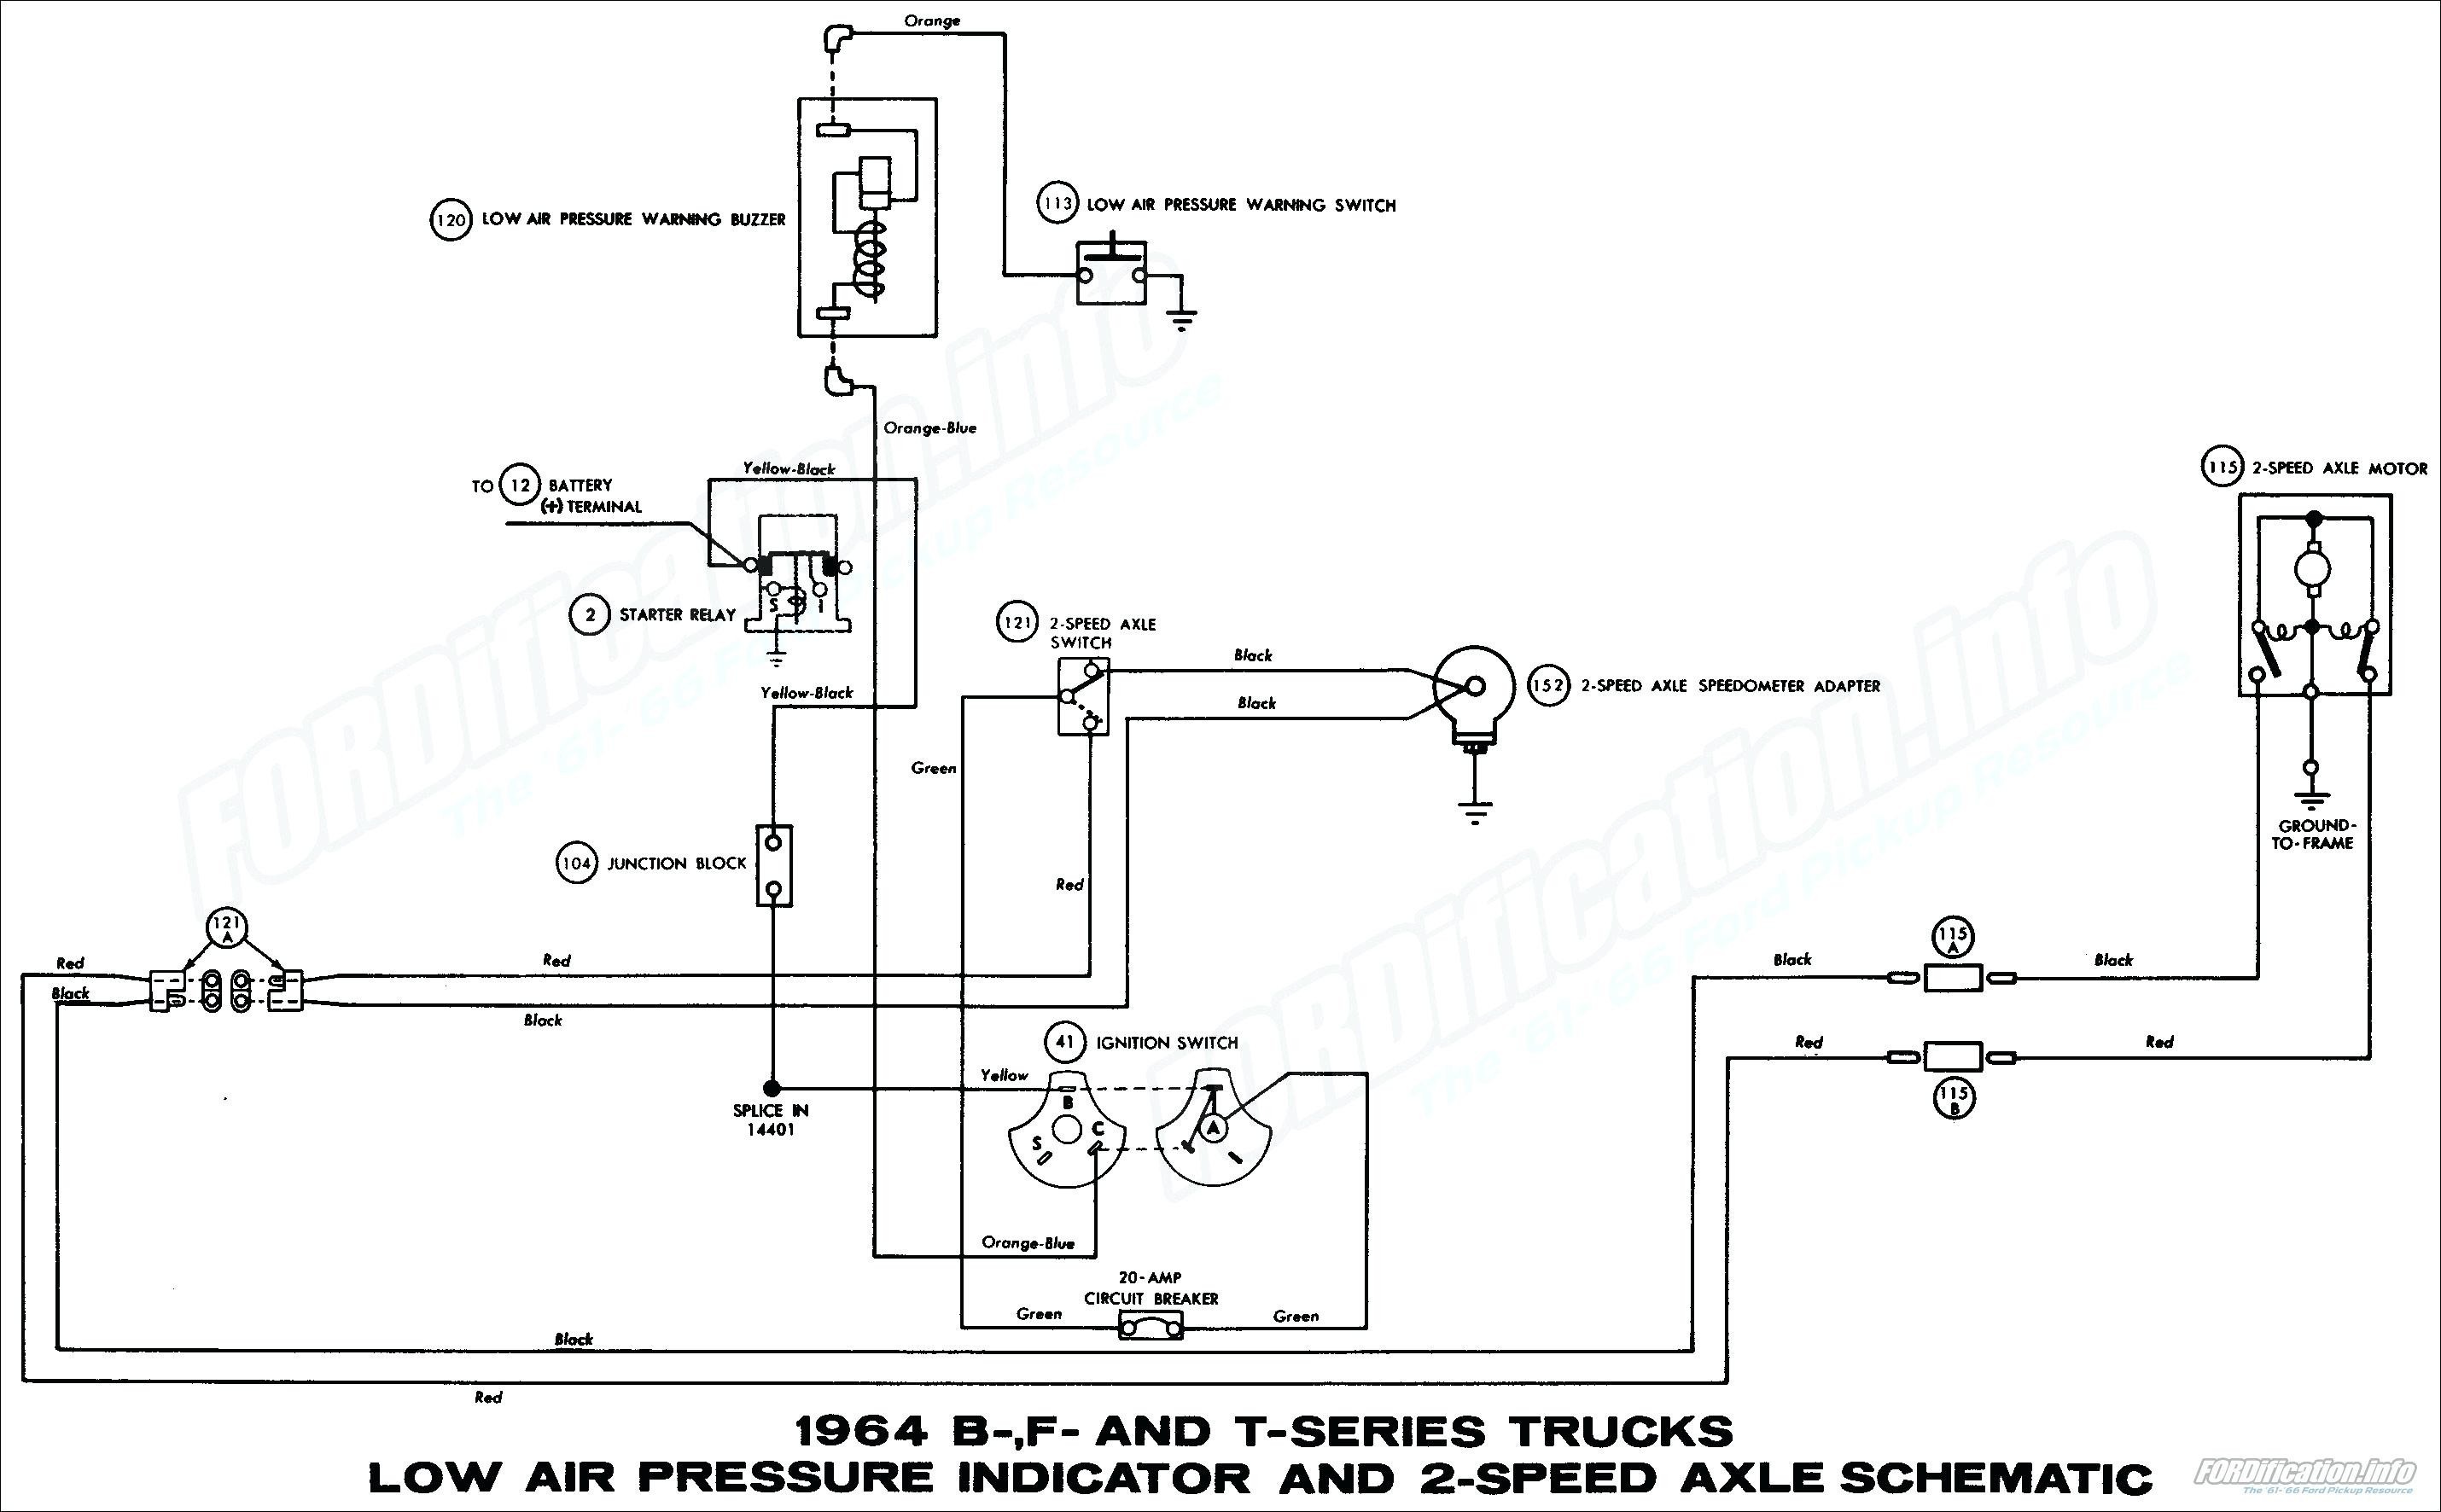 Basic Air Brake System Diagram Air Pressor Relay Wiring Diagram Of Basic Air Brake System Diagram